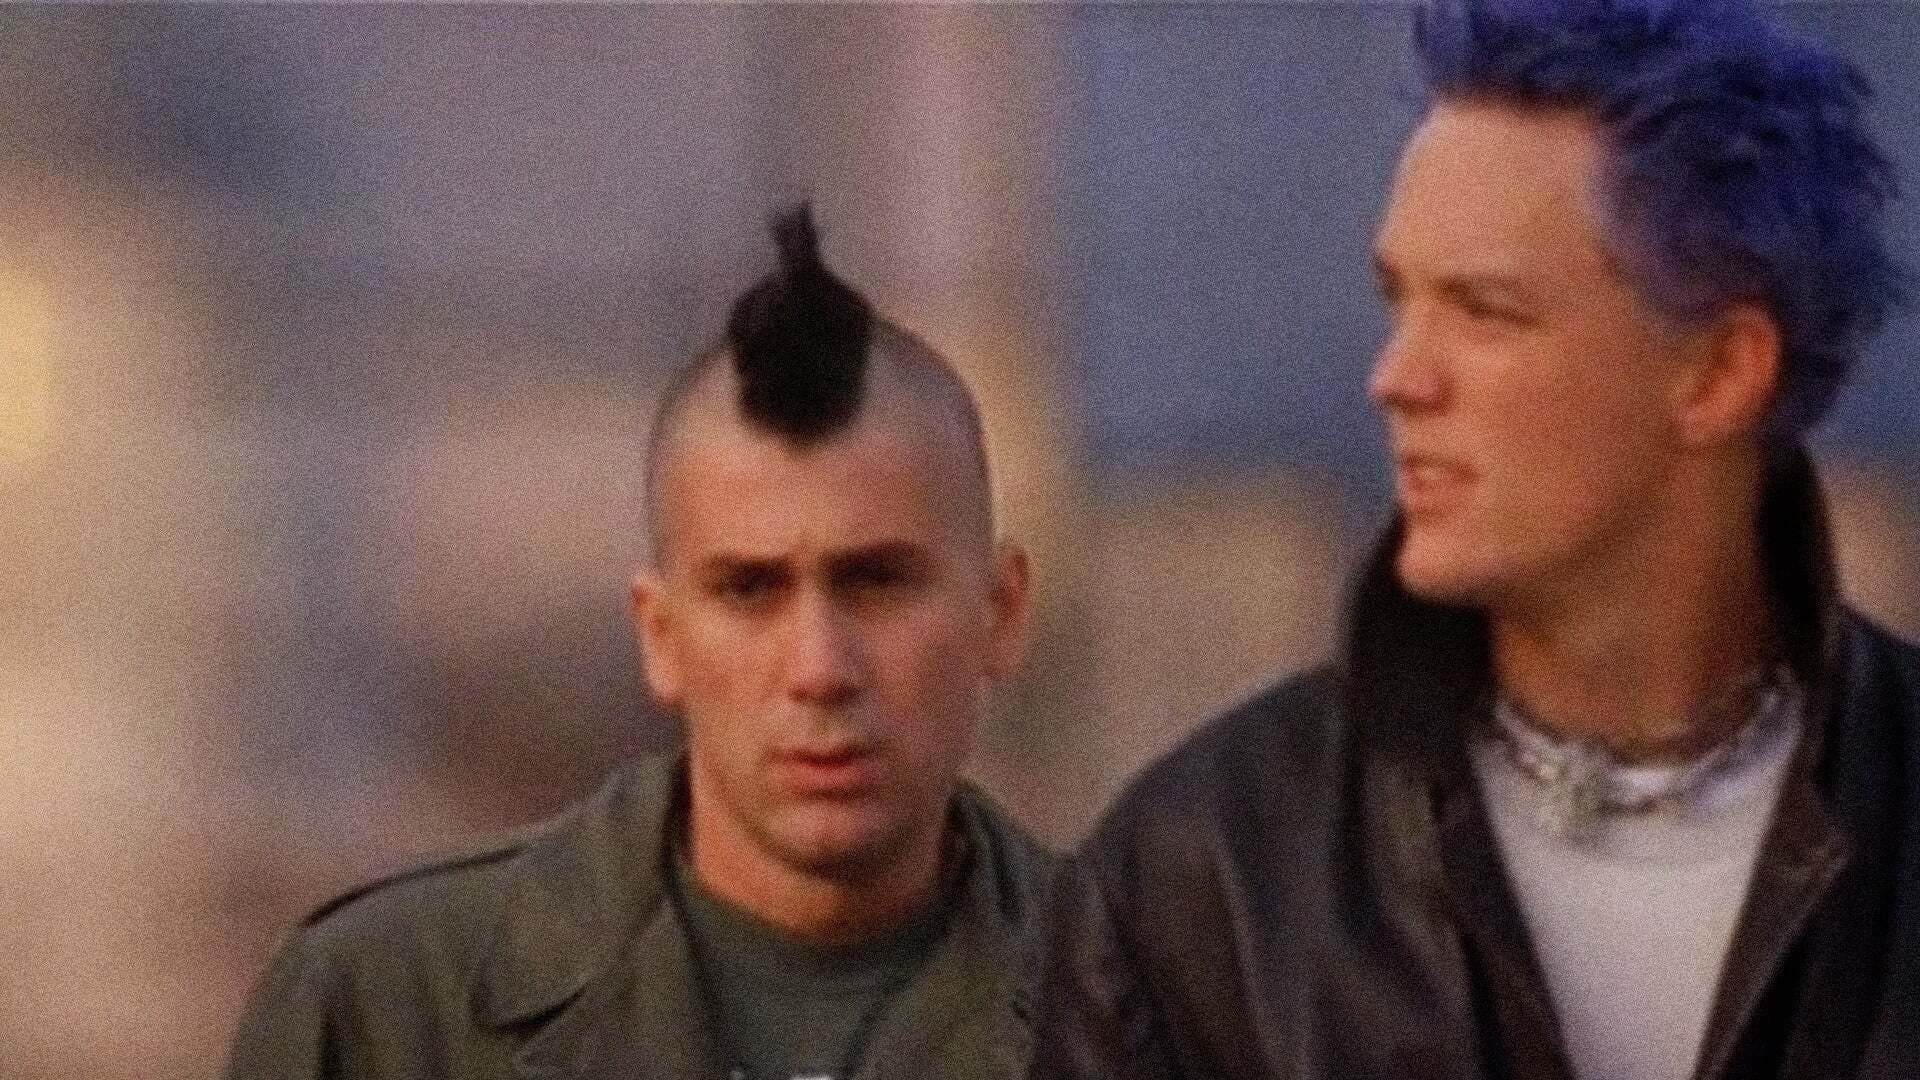 SLC Punk 1998 123movies